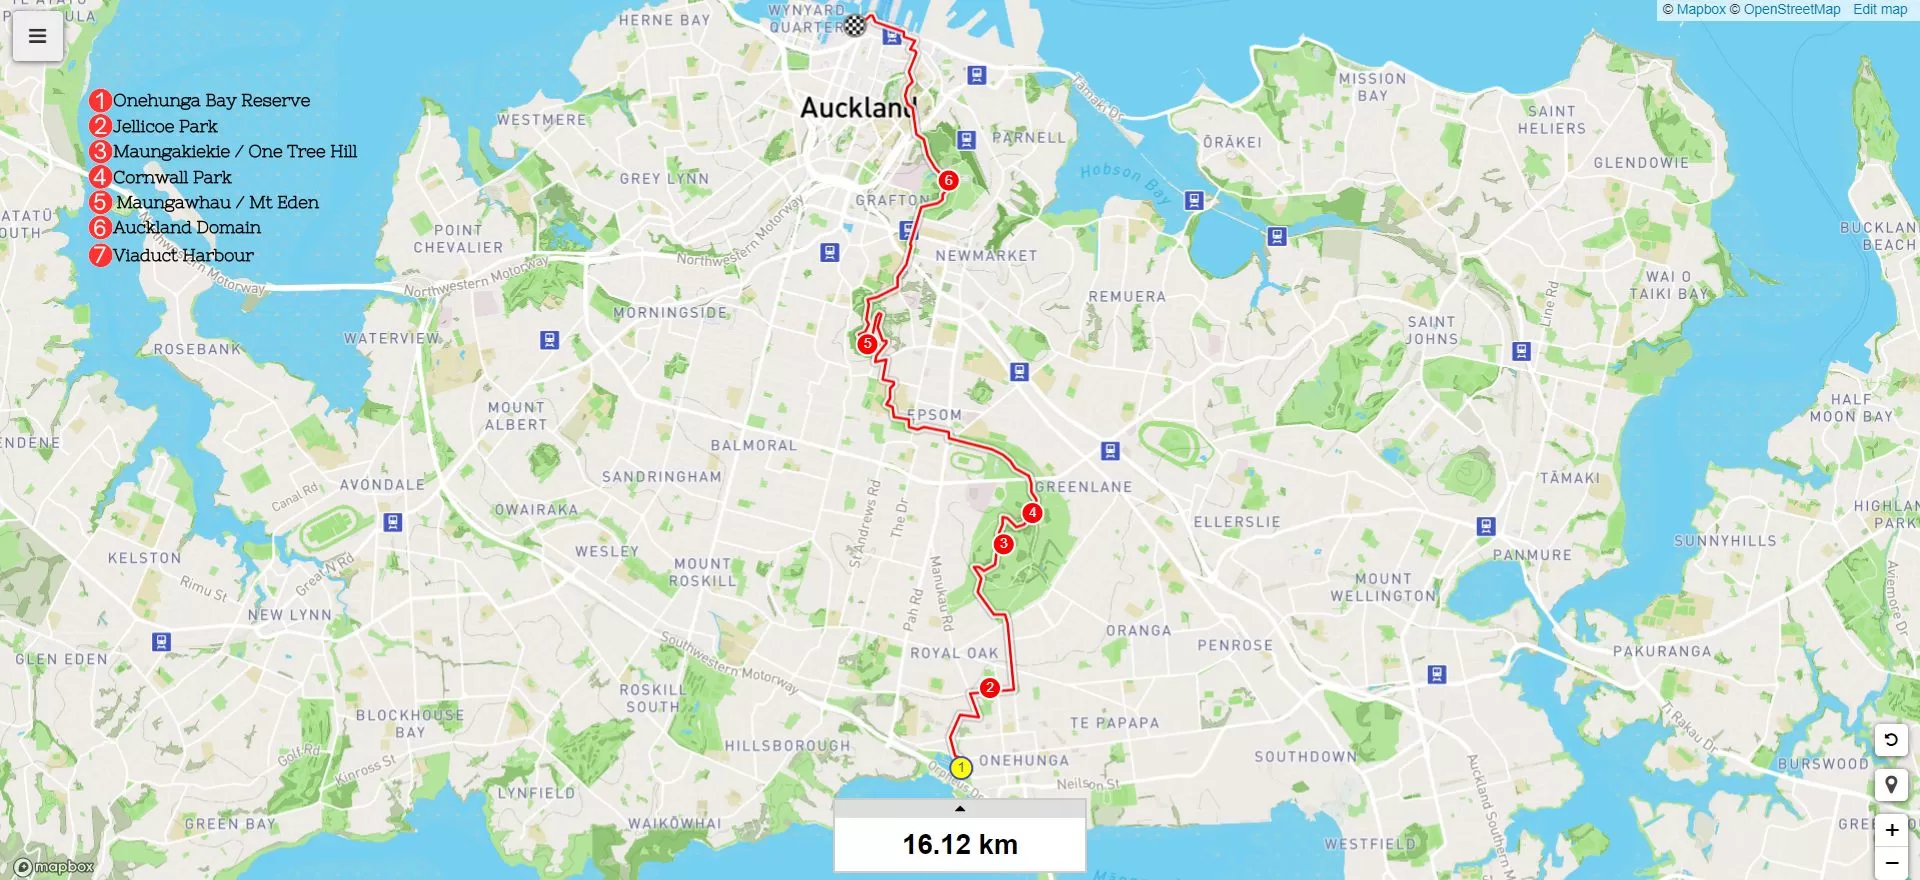 Auckland Coast to Coast Trail Map